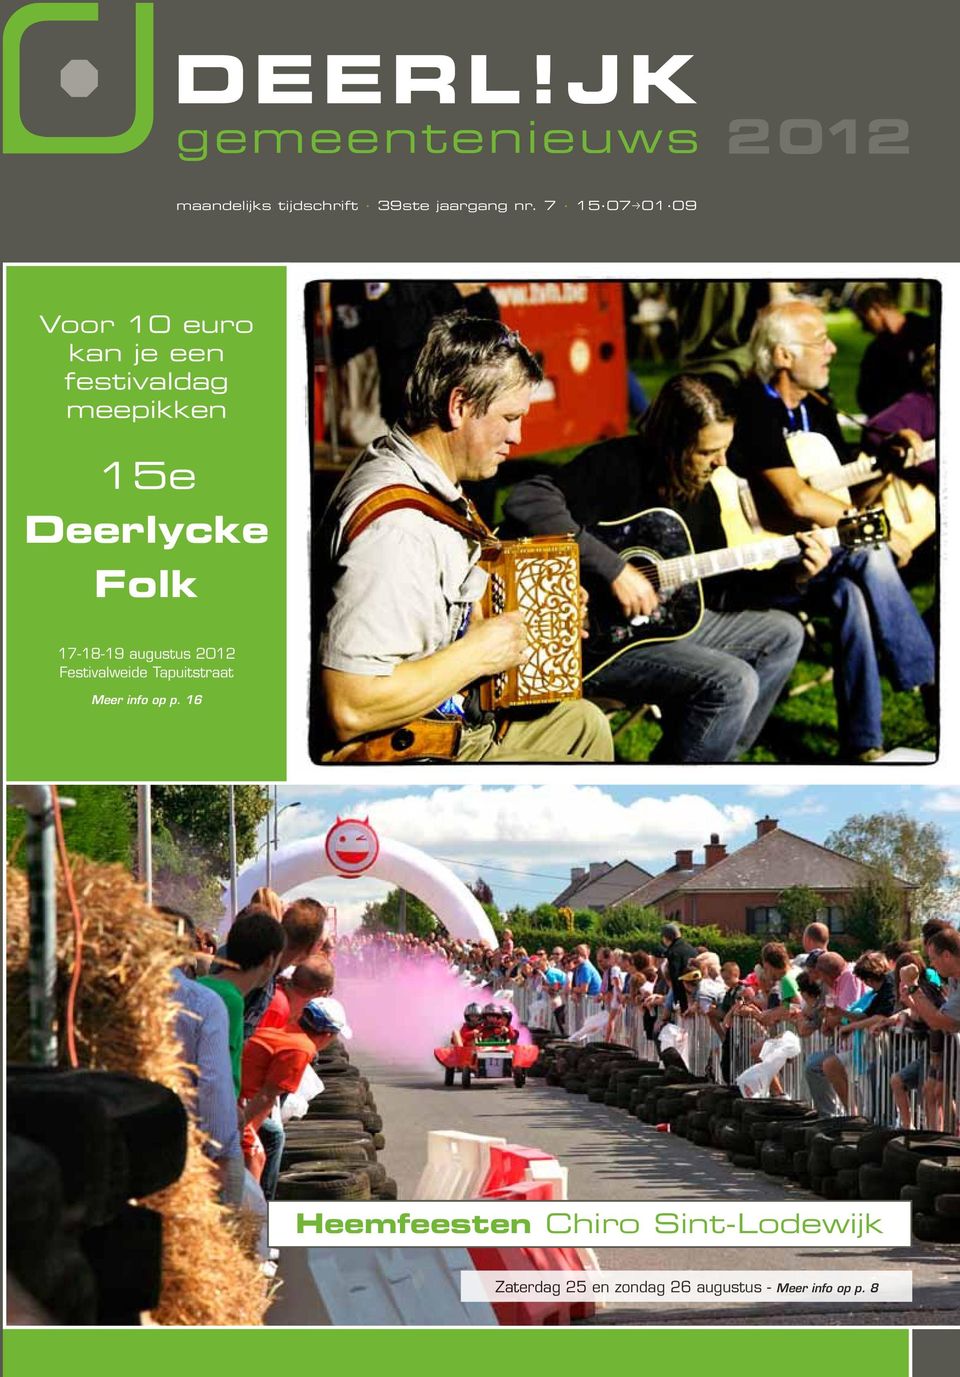 Deerlycke Folk 17-18-19 augustus 2012 Festivalweide Tapuitstraat